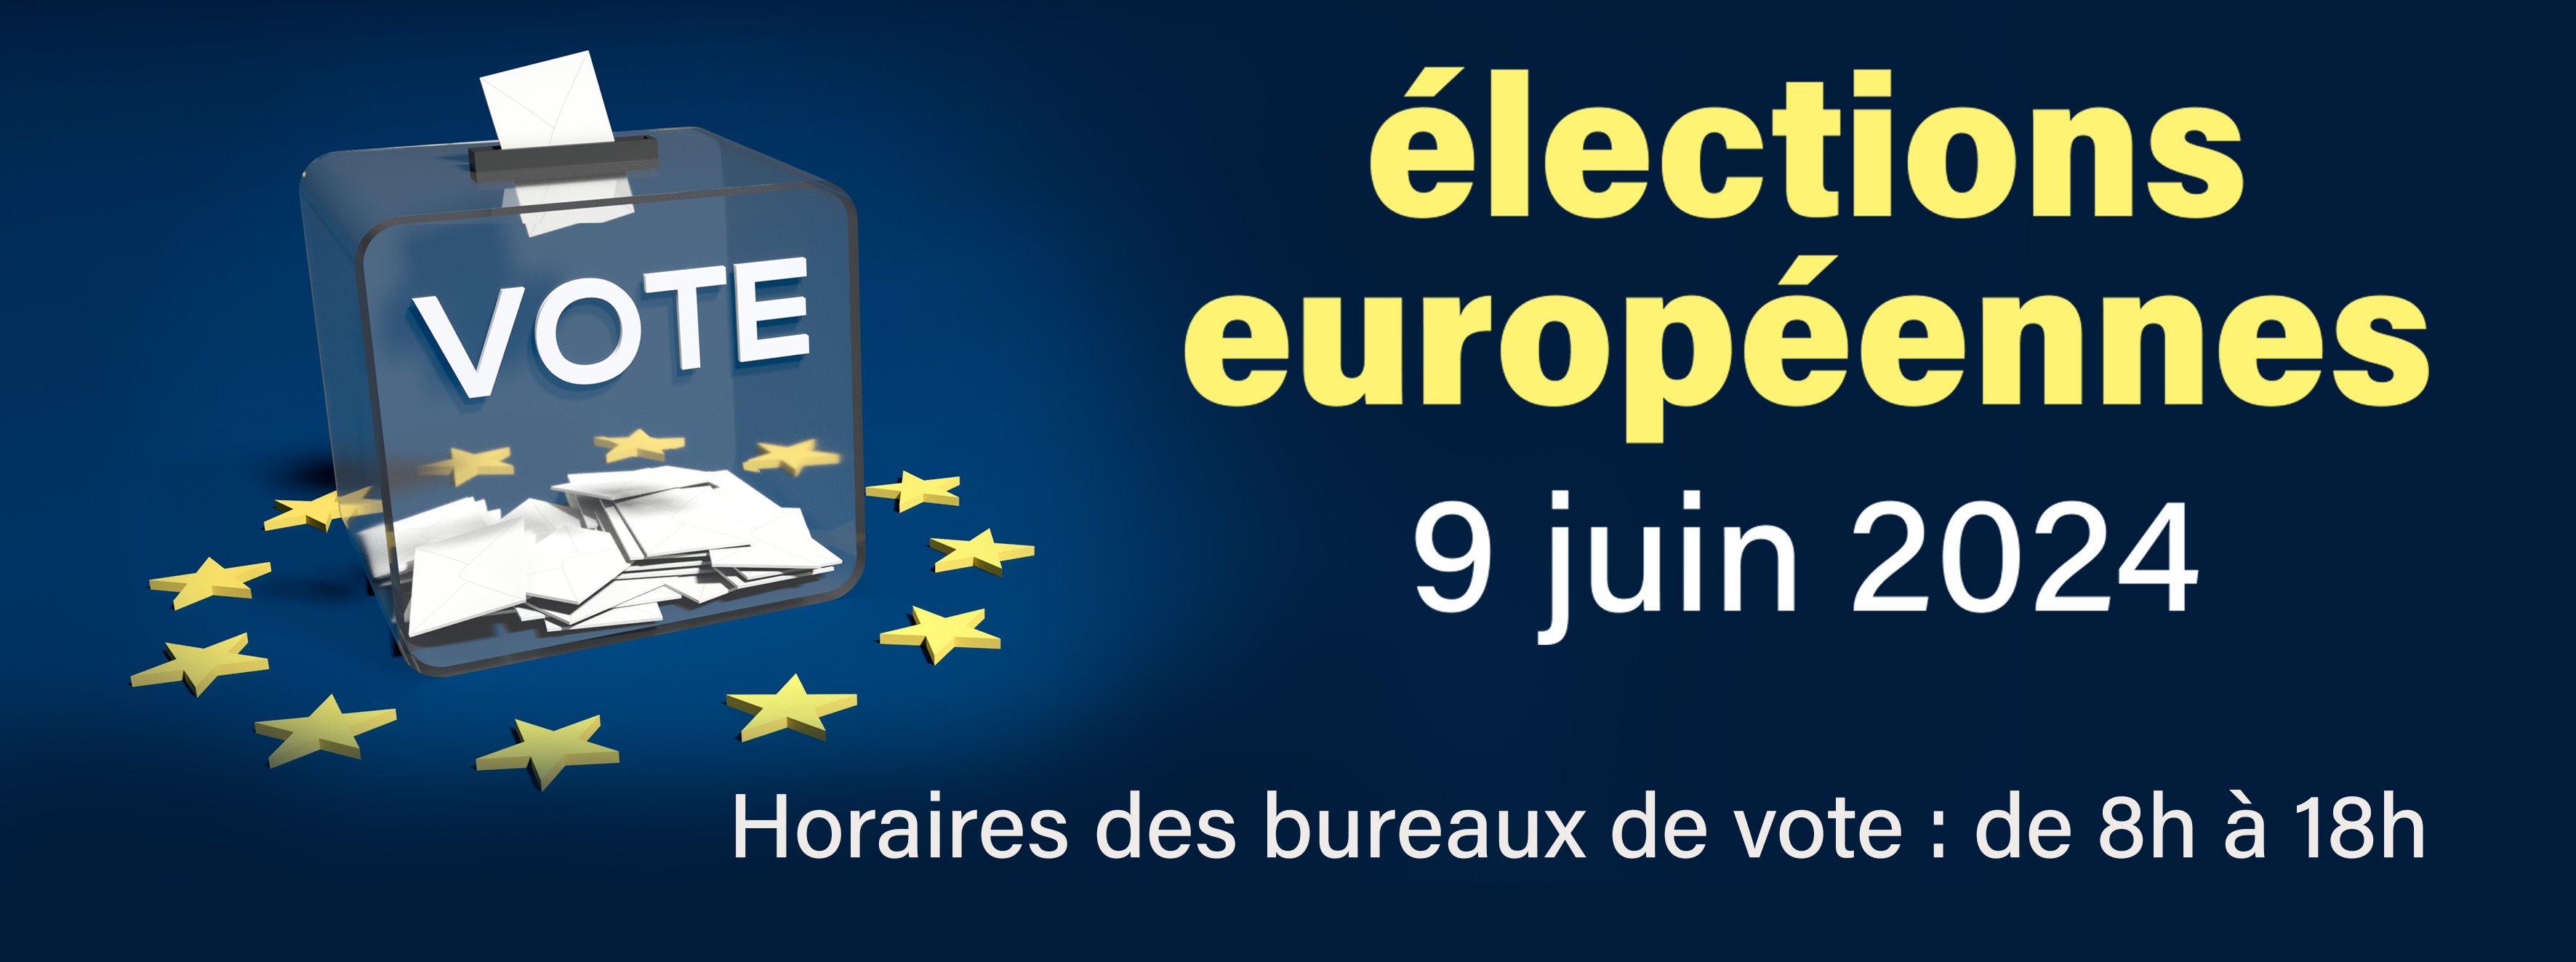 compo- bandeau - elections europeennes.jpg